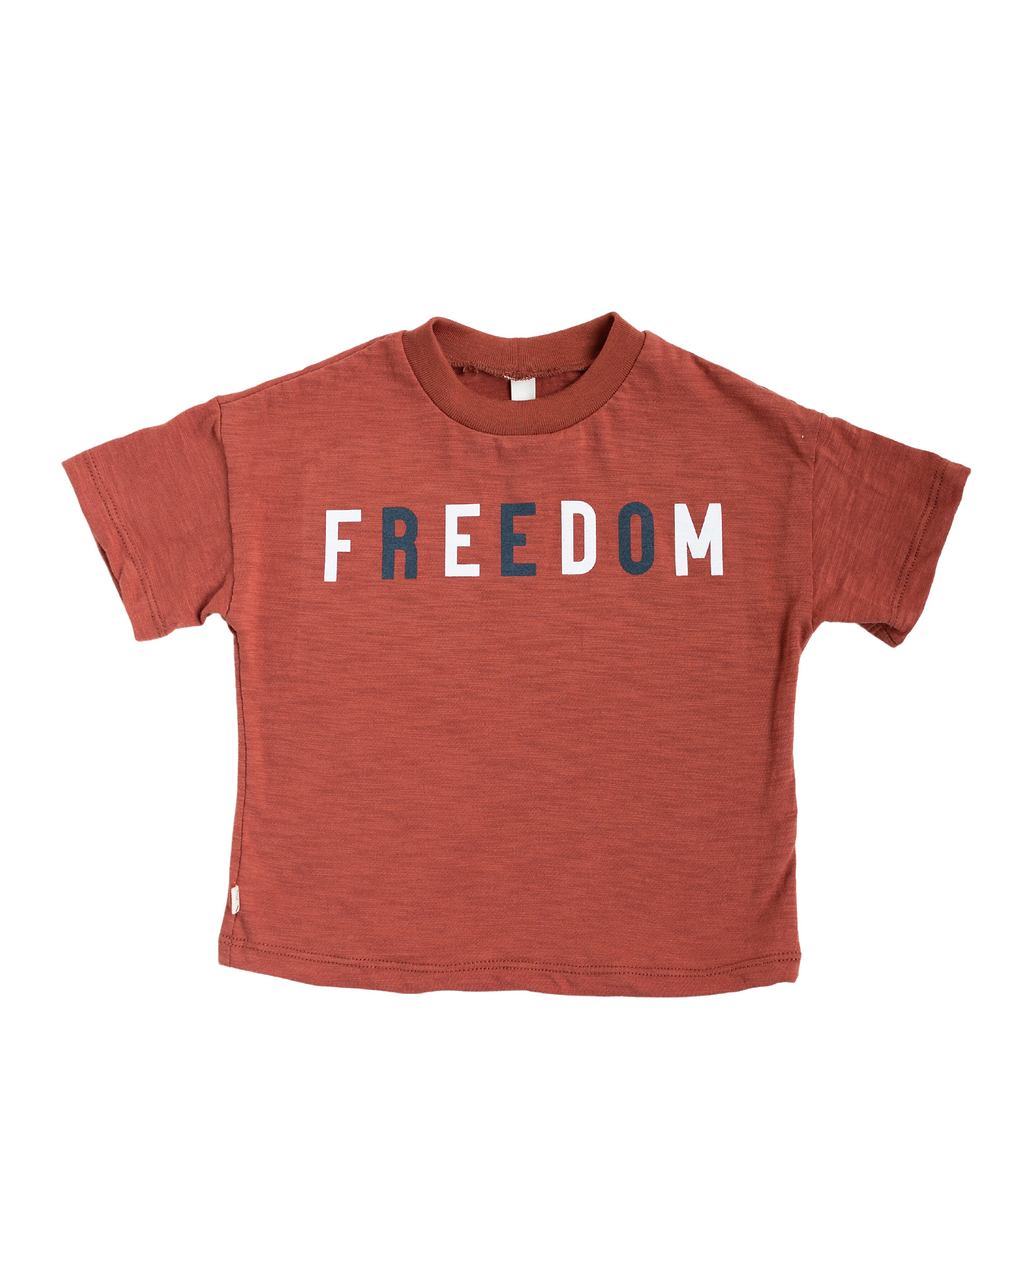 boxy tee - freedom on barn red